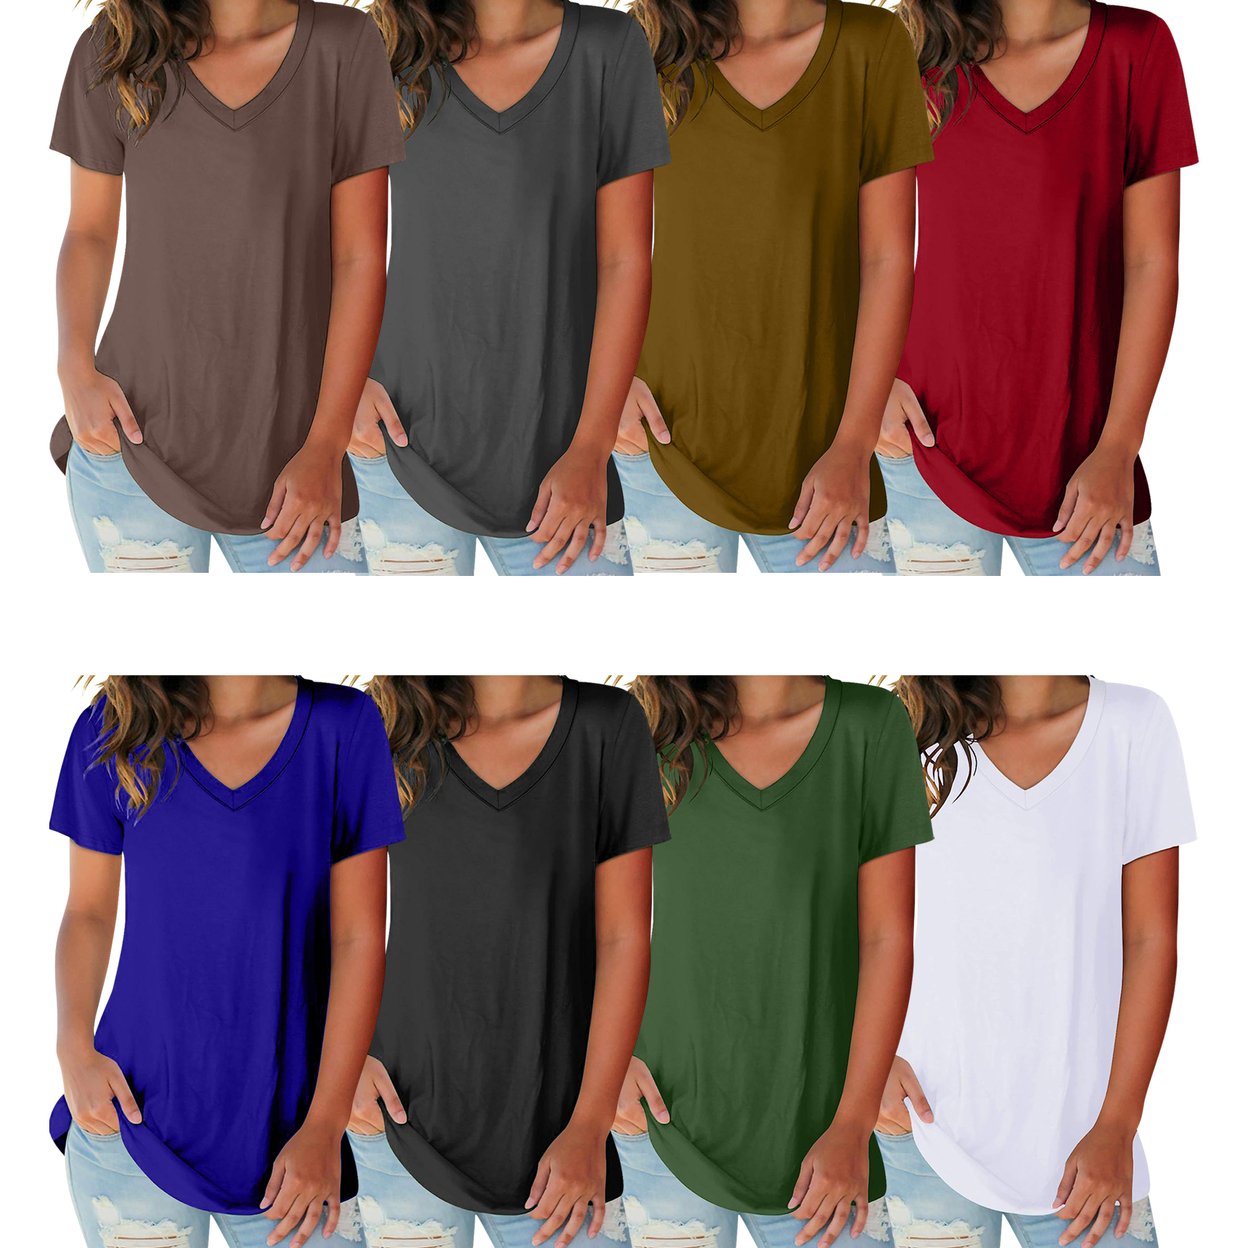 2-Pack: Women's Ultra Soft Smooth Cotton Blend Basic V-Neck Short Sleeve Shirts - Black & Red, Medium